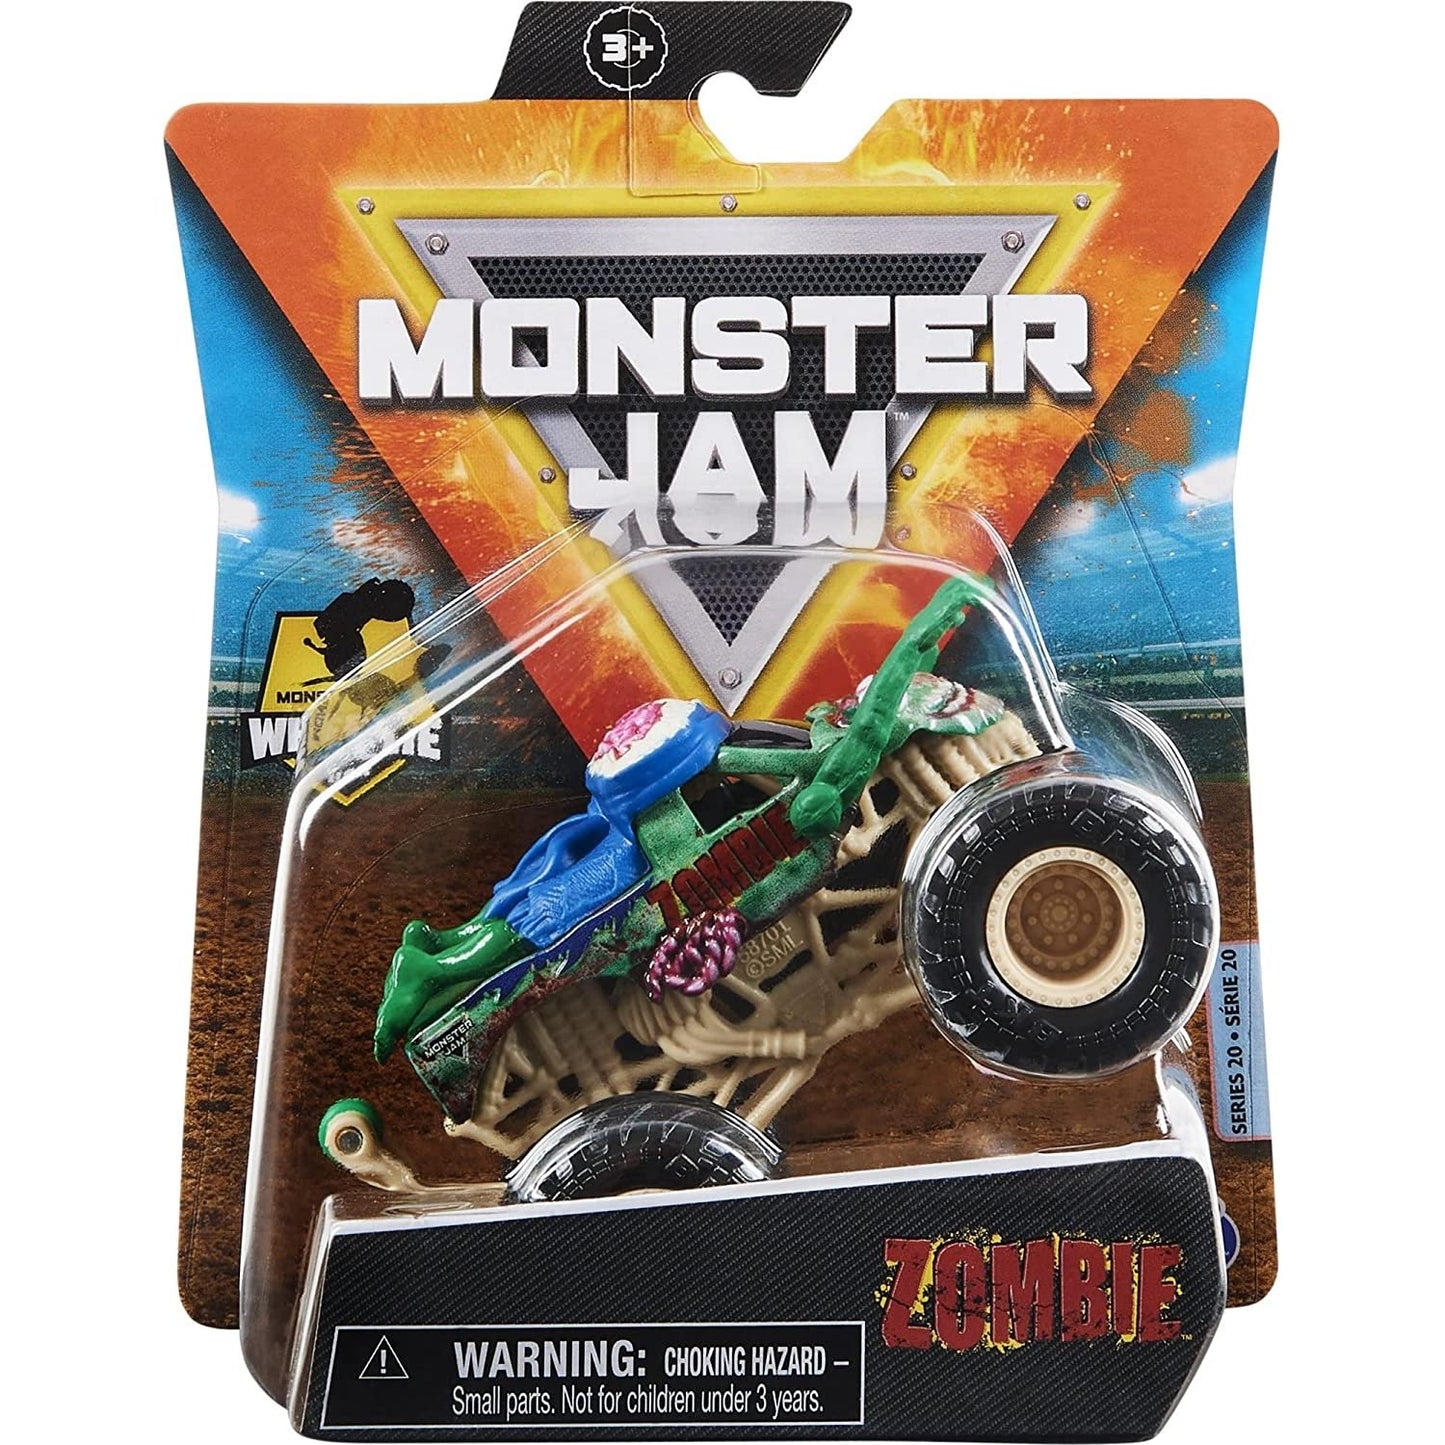 Monster Jam 2021 Spin Master 1:64 Diecast Monster Truck with Wheelie Bar: Bone Yard Trucks Biker Zombie from 2P Gaming